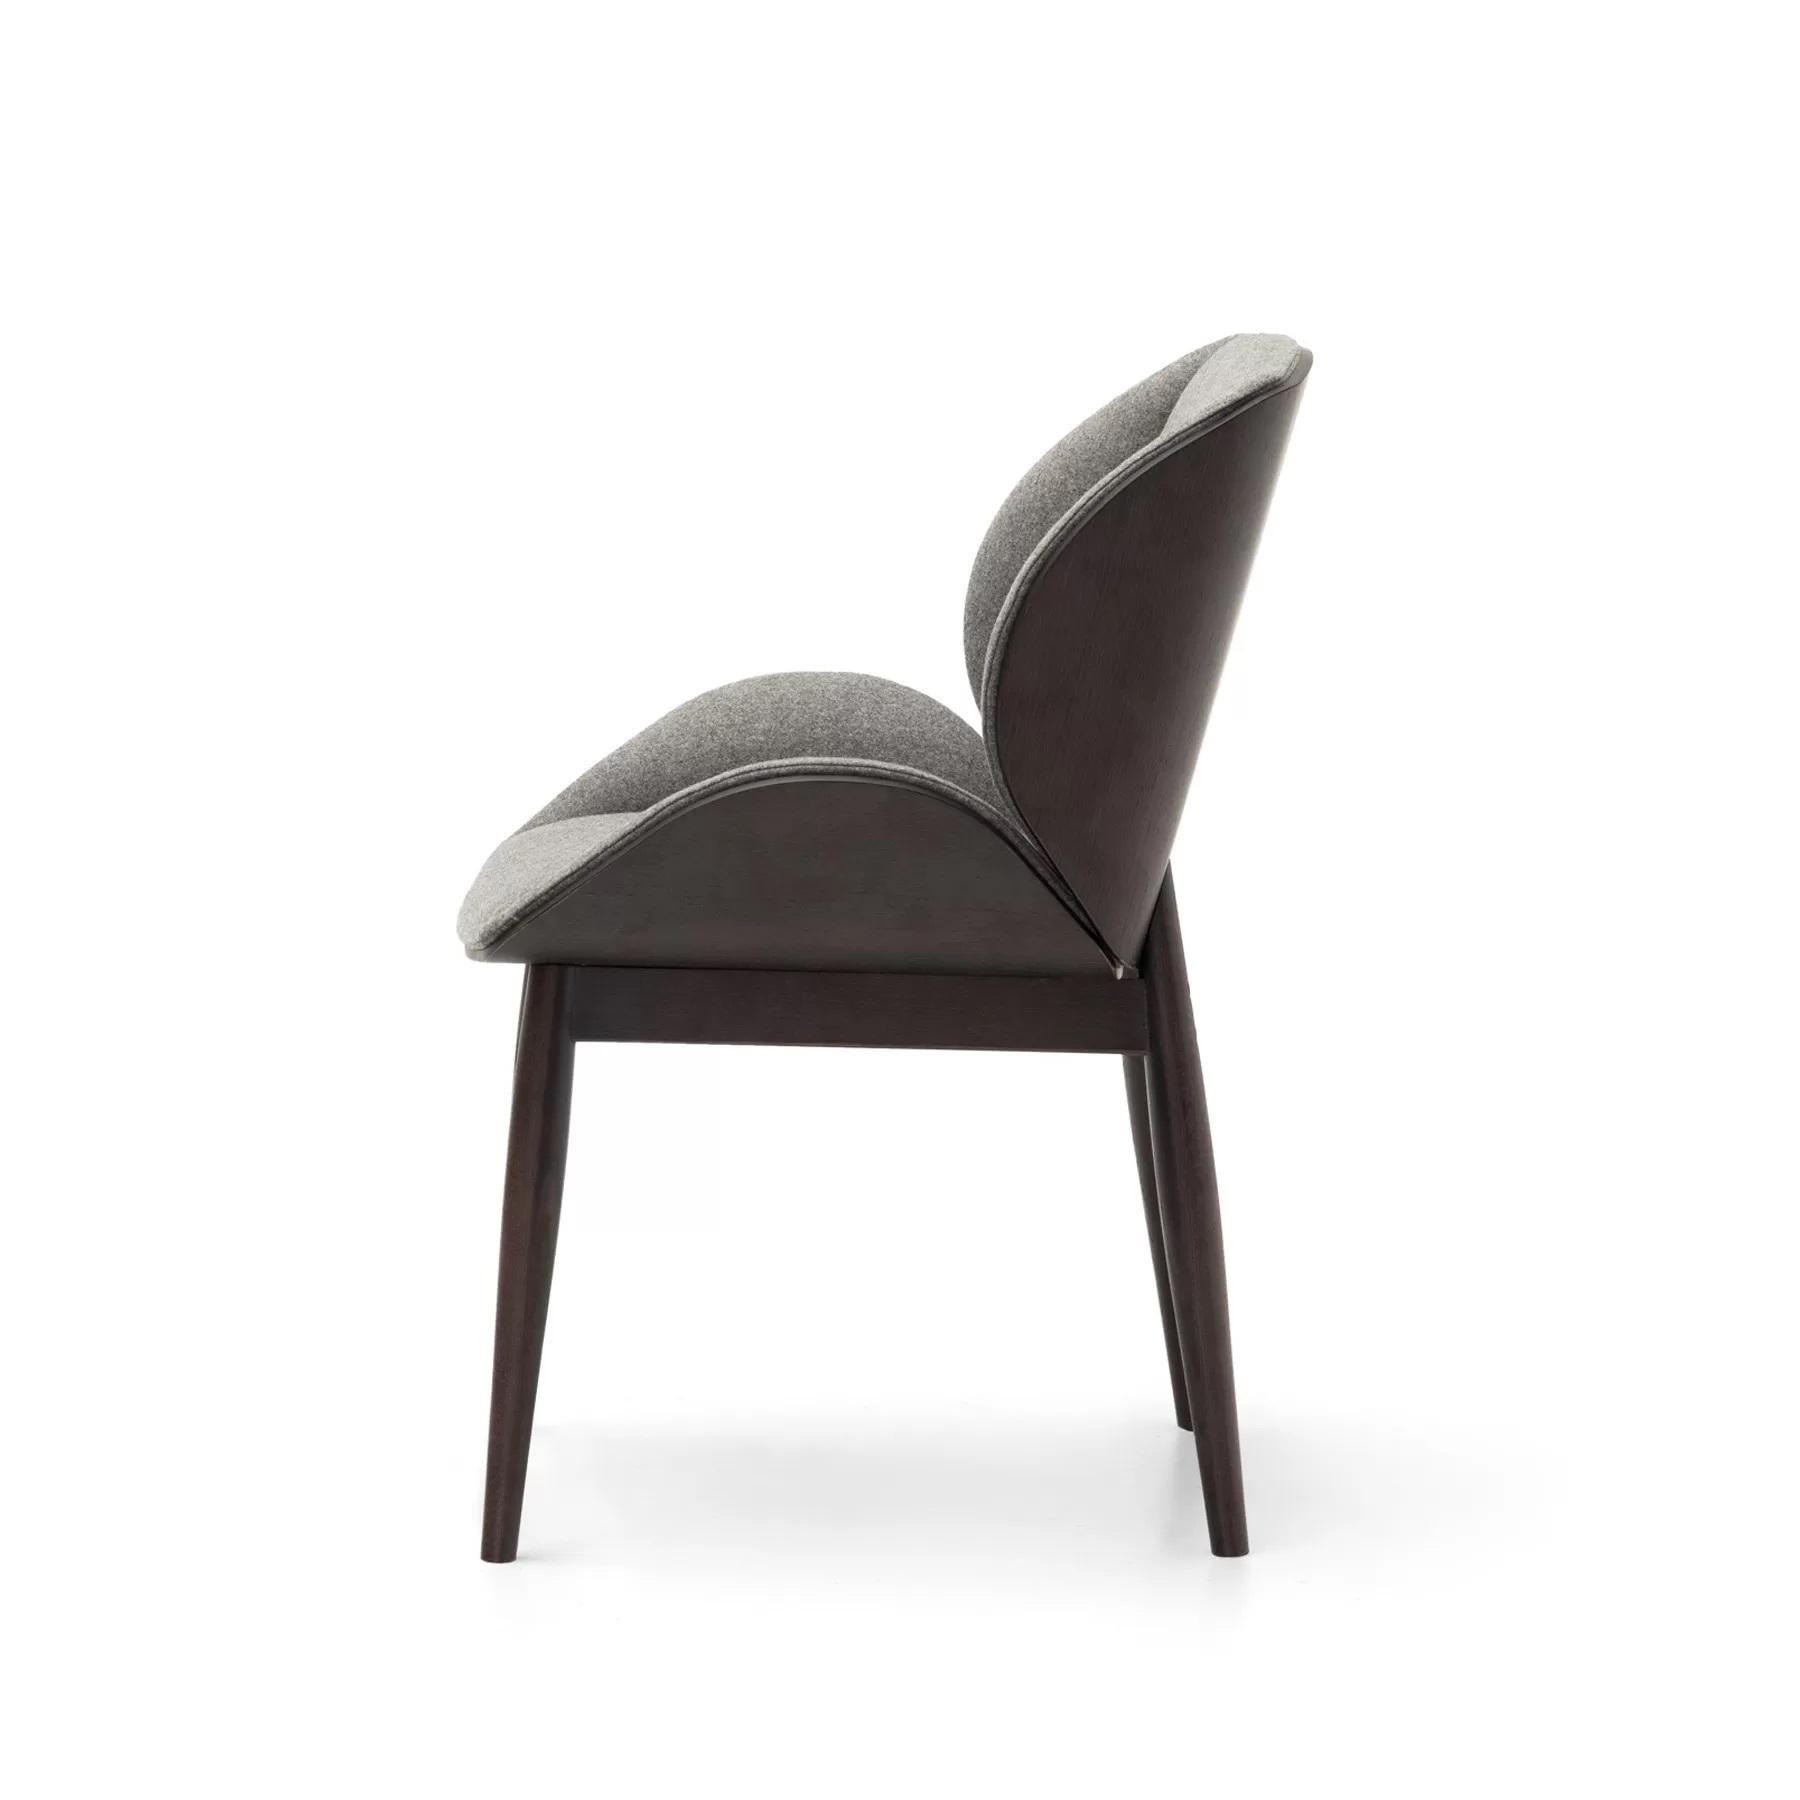 ergonomic dining chairs